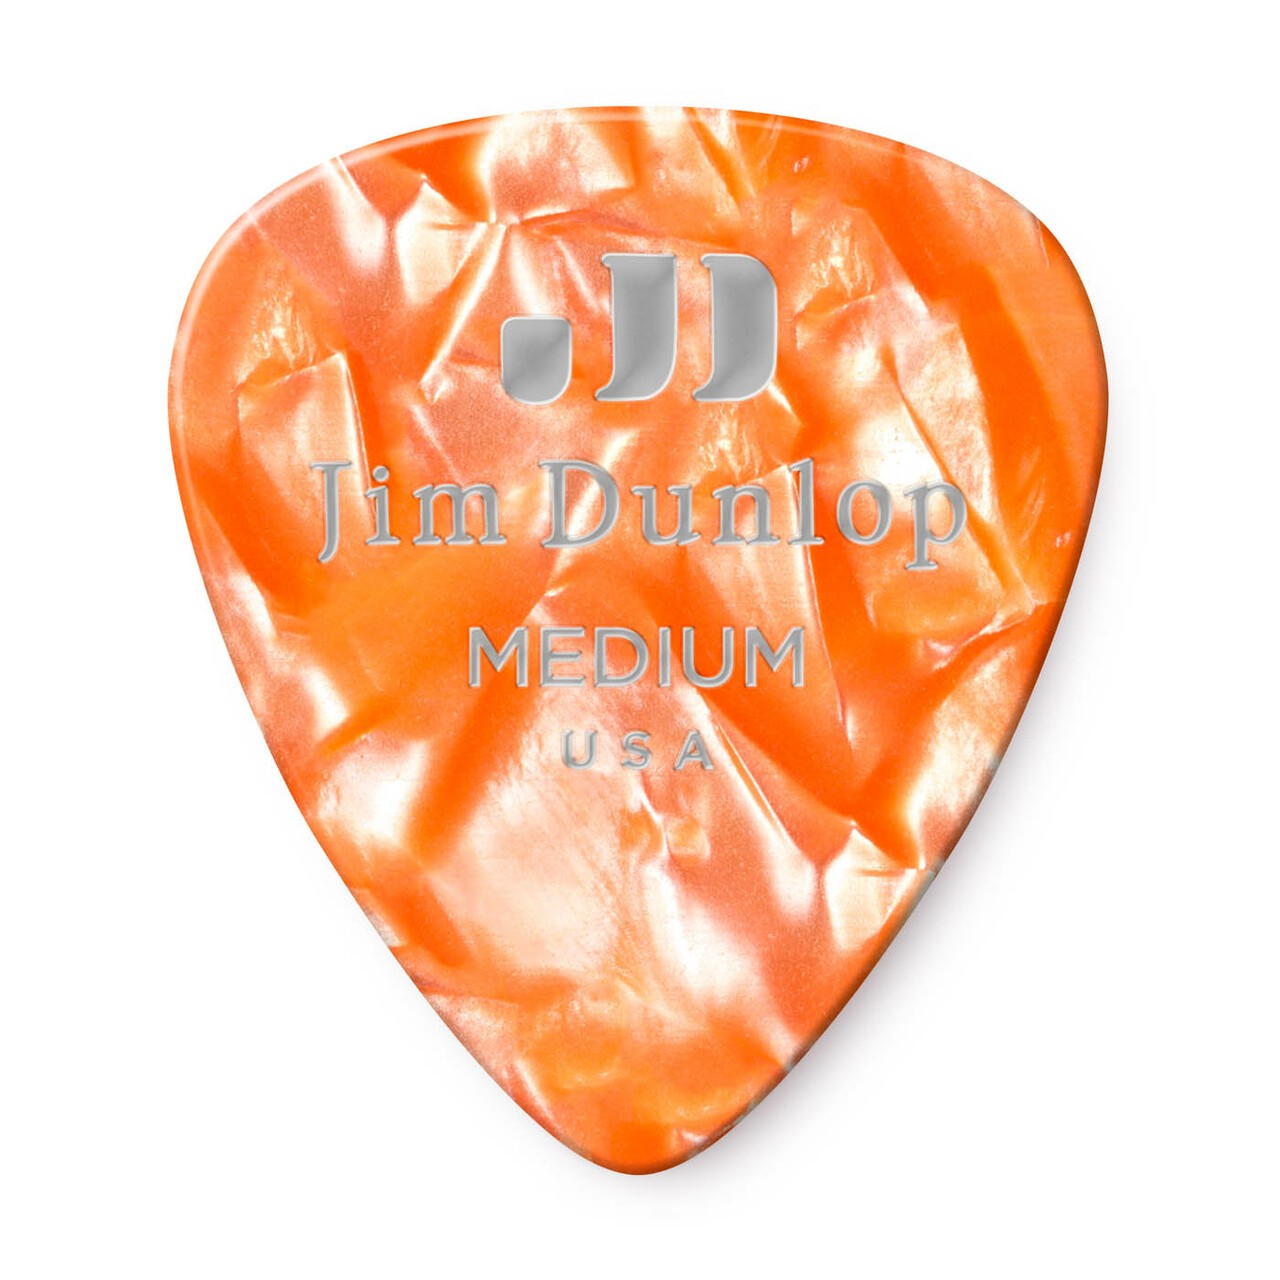 DUNLOP Médiators Celluloid Orange Pearloid